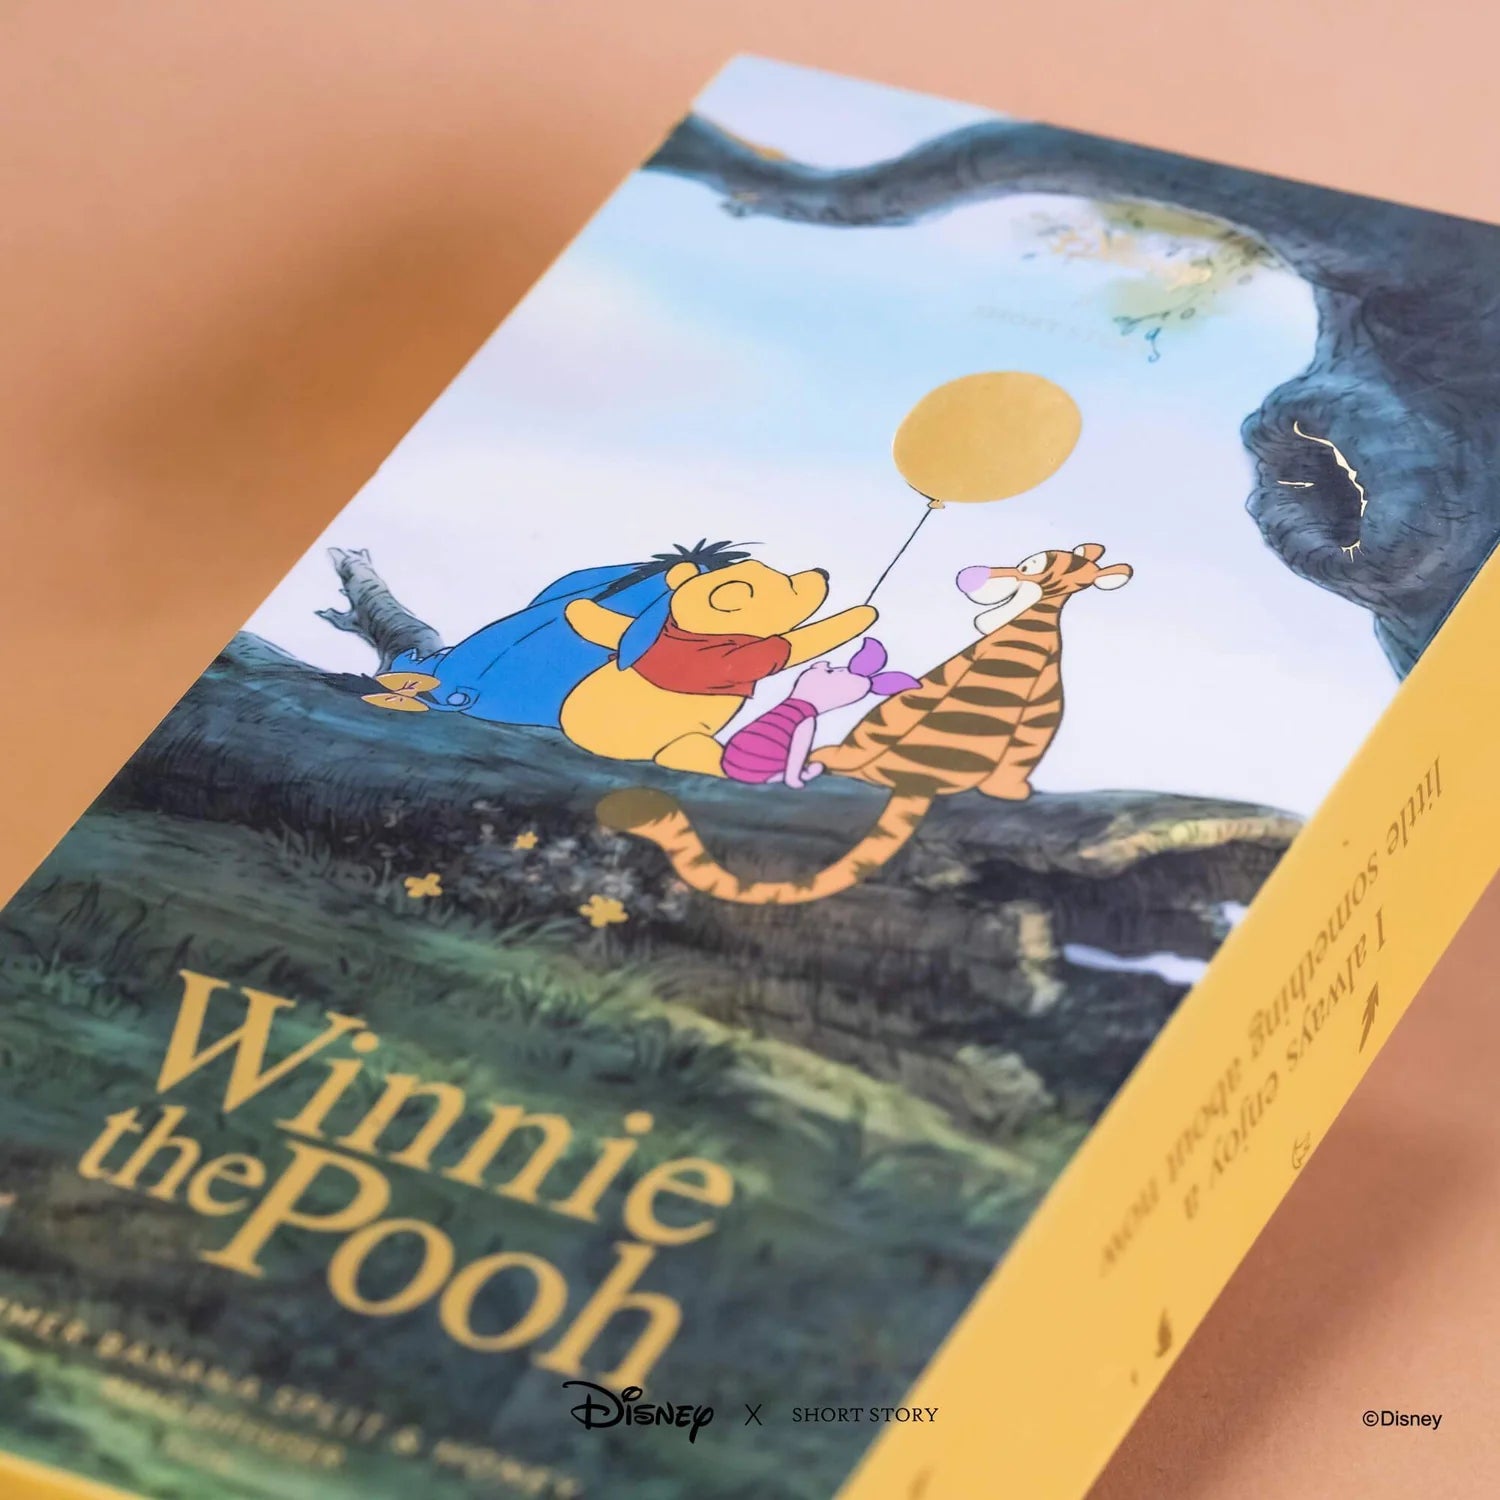 Short Story - Disney Winnie The Pooh Diffuser